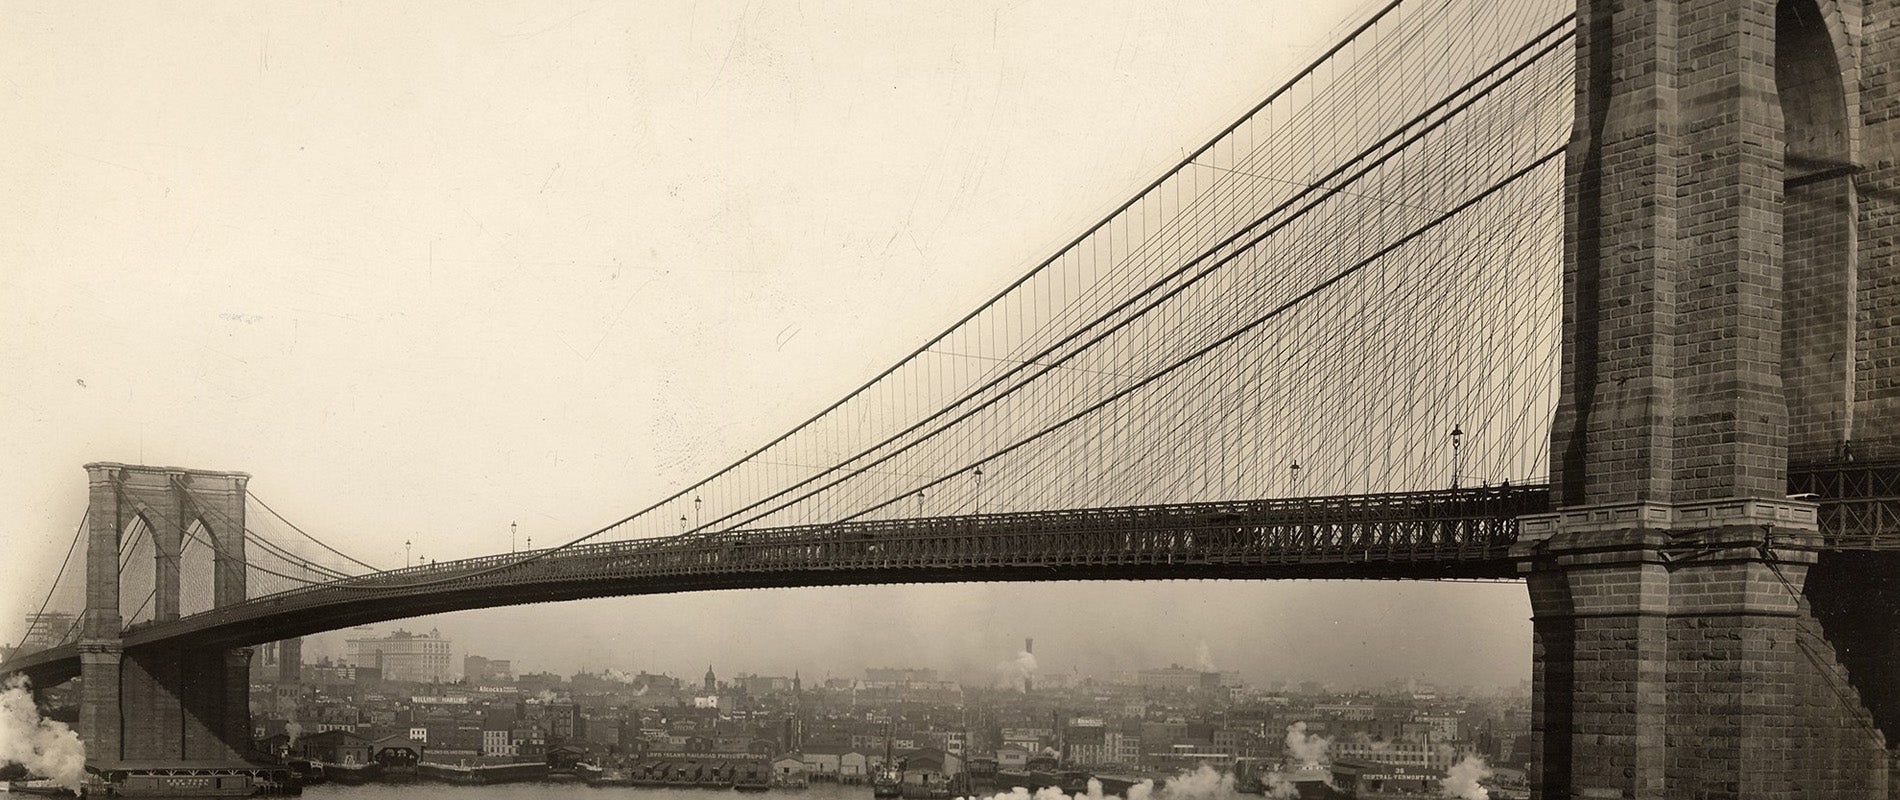 Historical photo of the Brooklyn Bridge